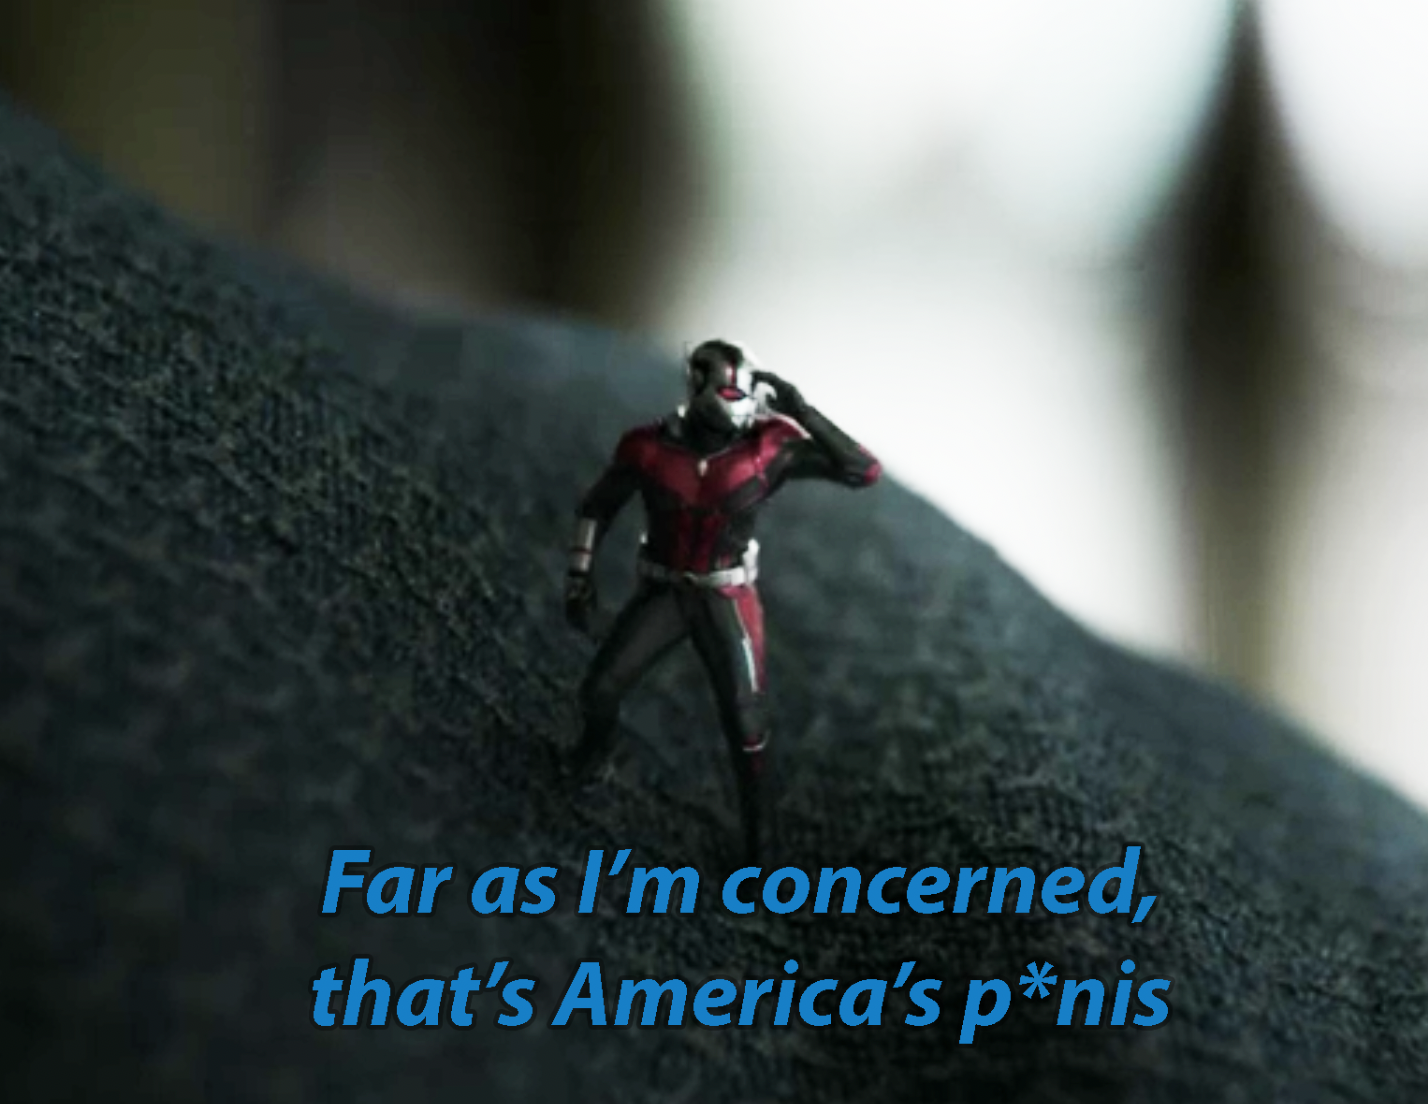 Chris Evans Leak Pic Ant-Man As Far As I'm Concerned